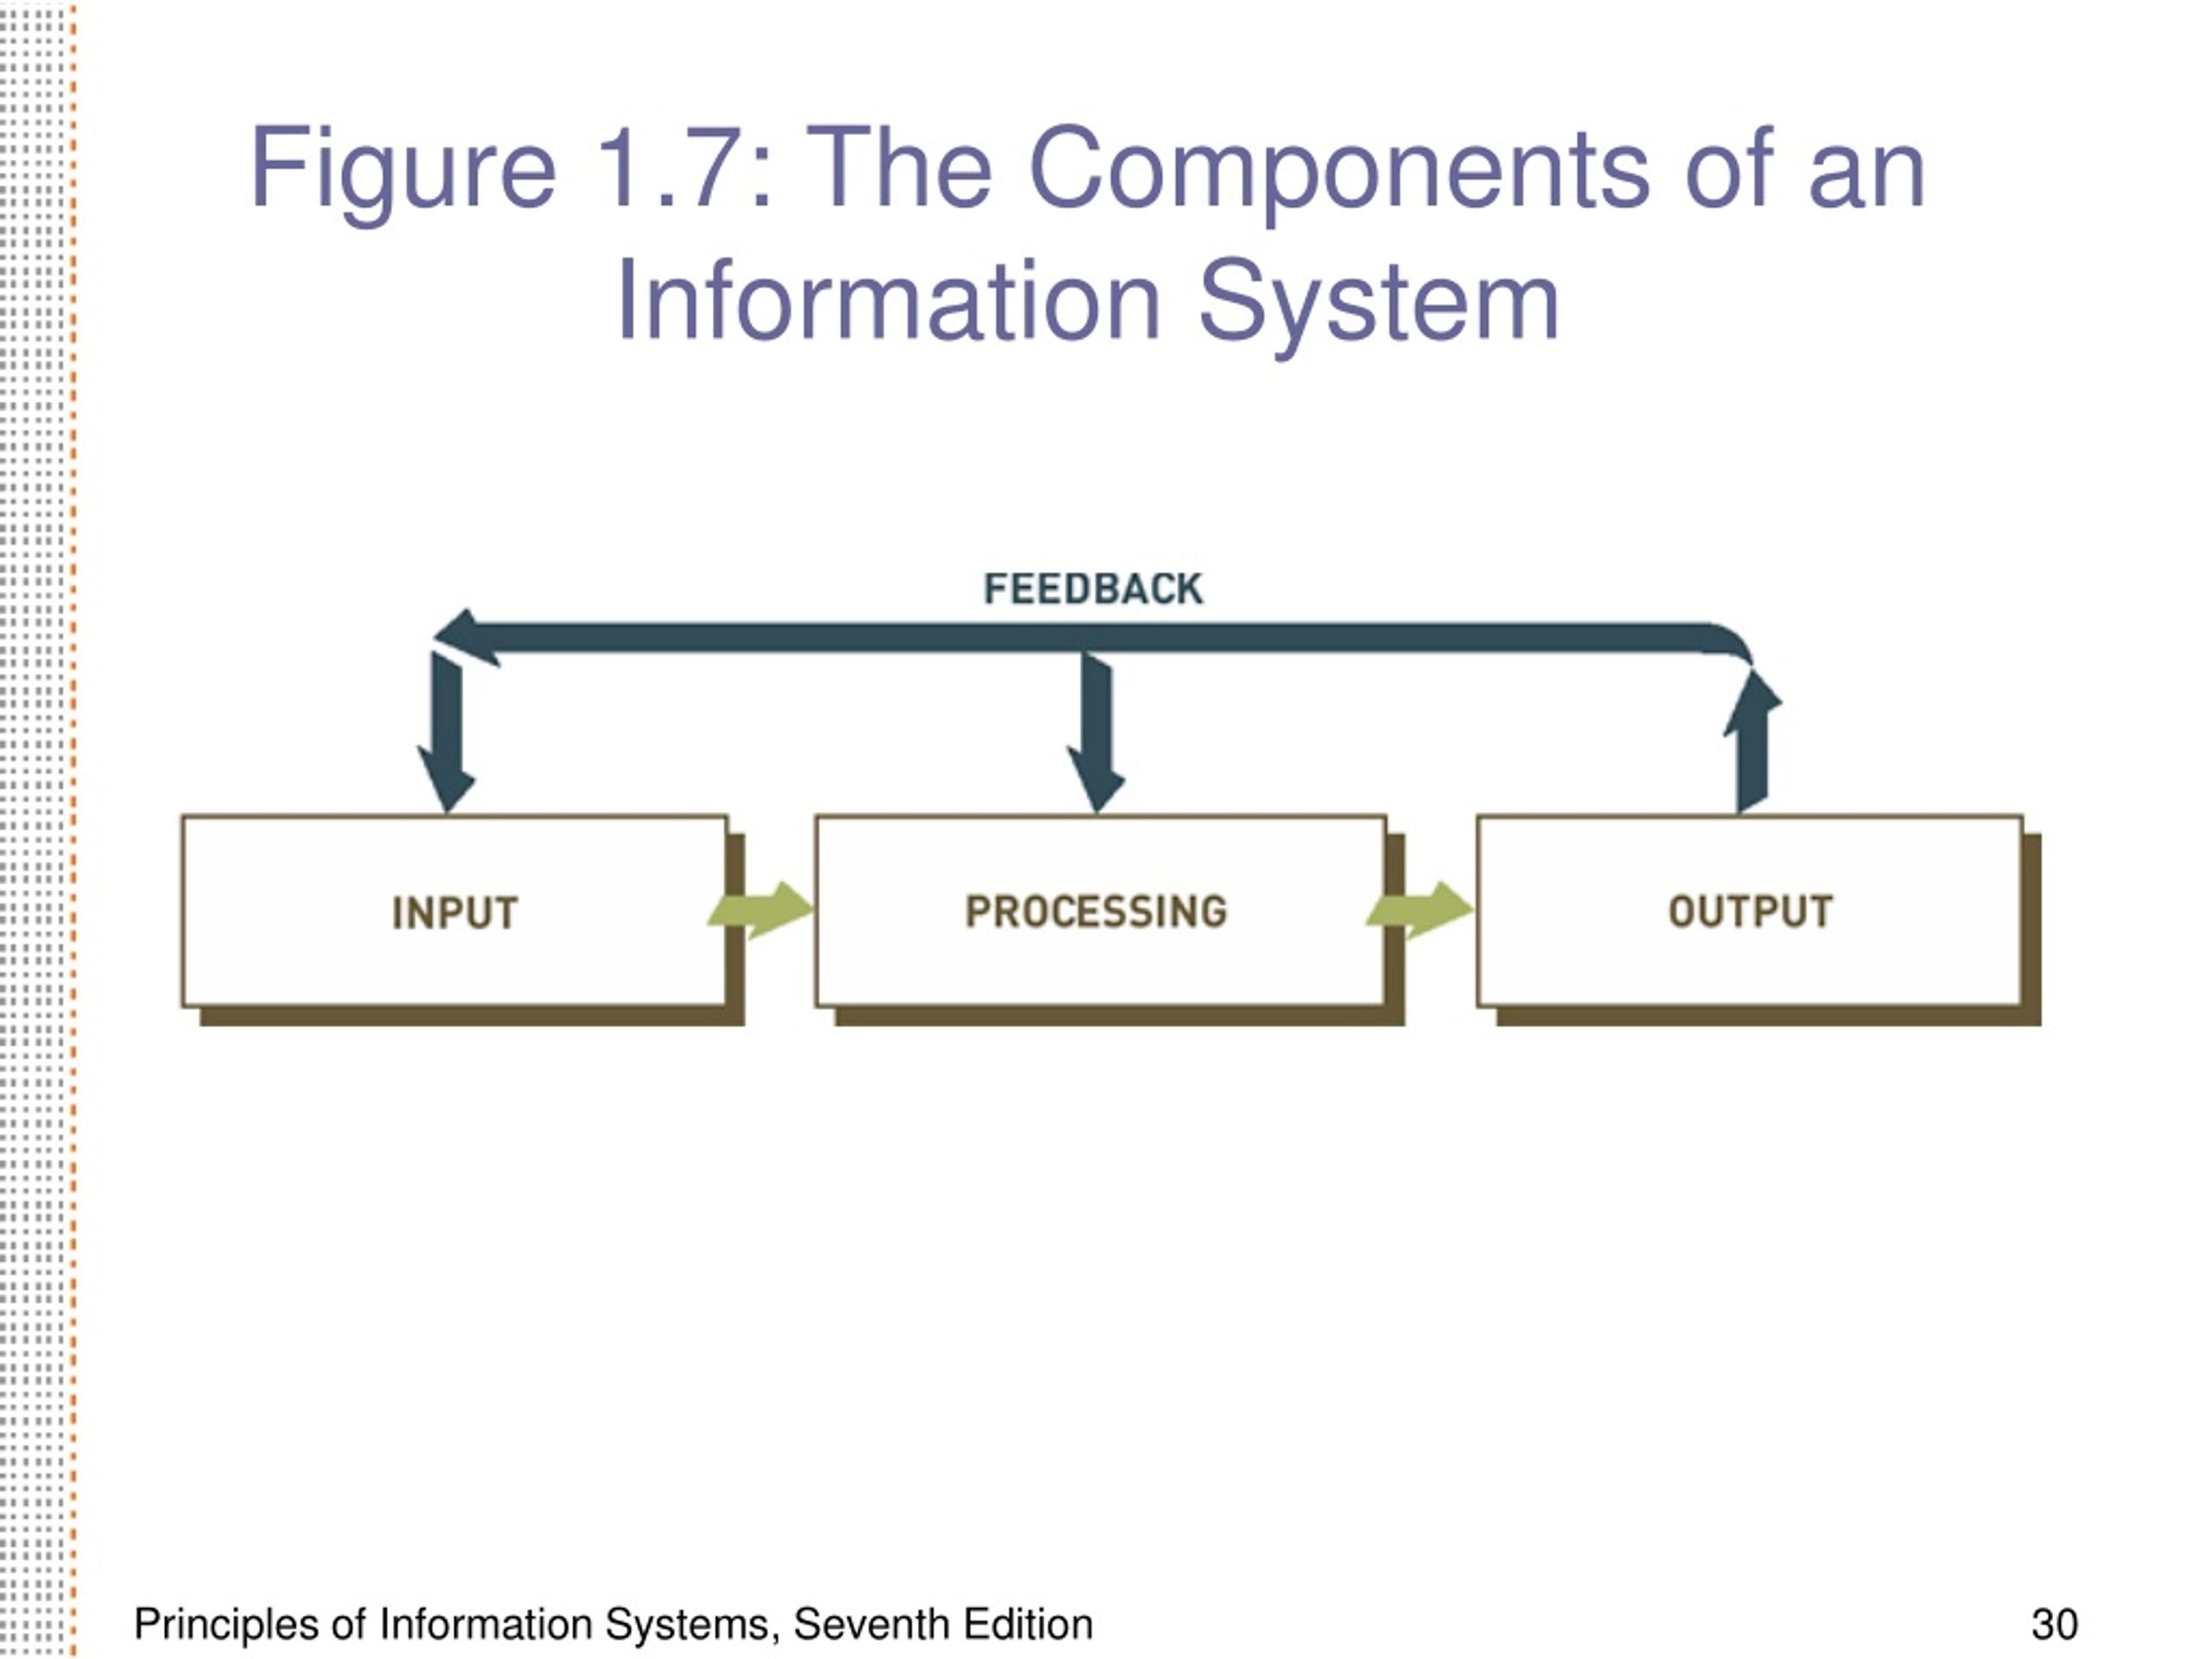 Url components. Information System components. Information value. 6 Generic components of information System. Information System and its components. Практическая работа..